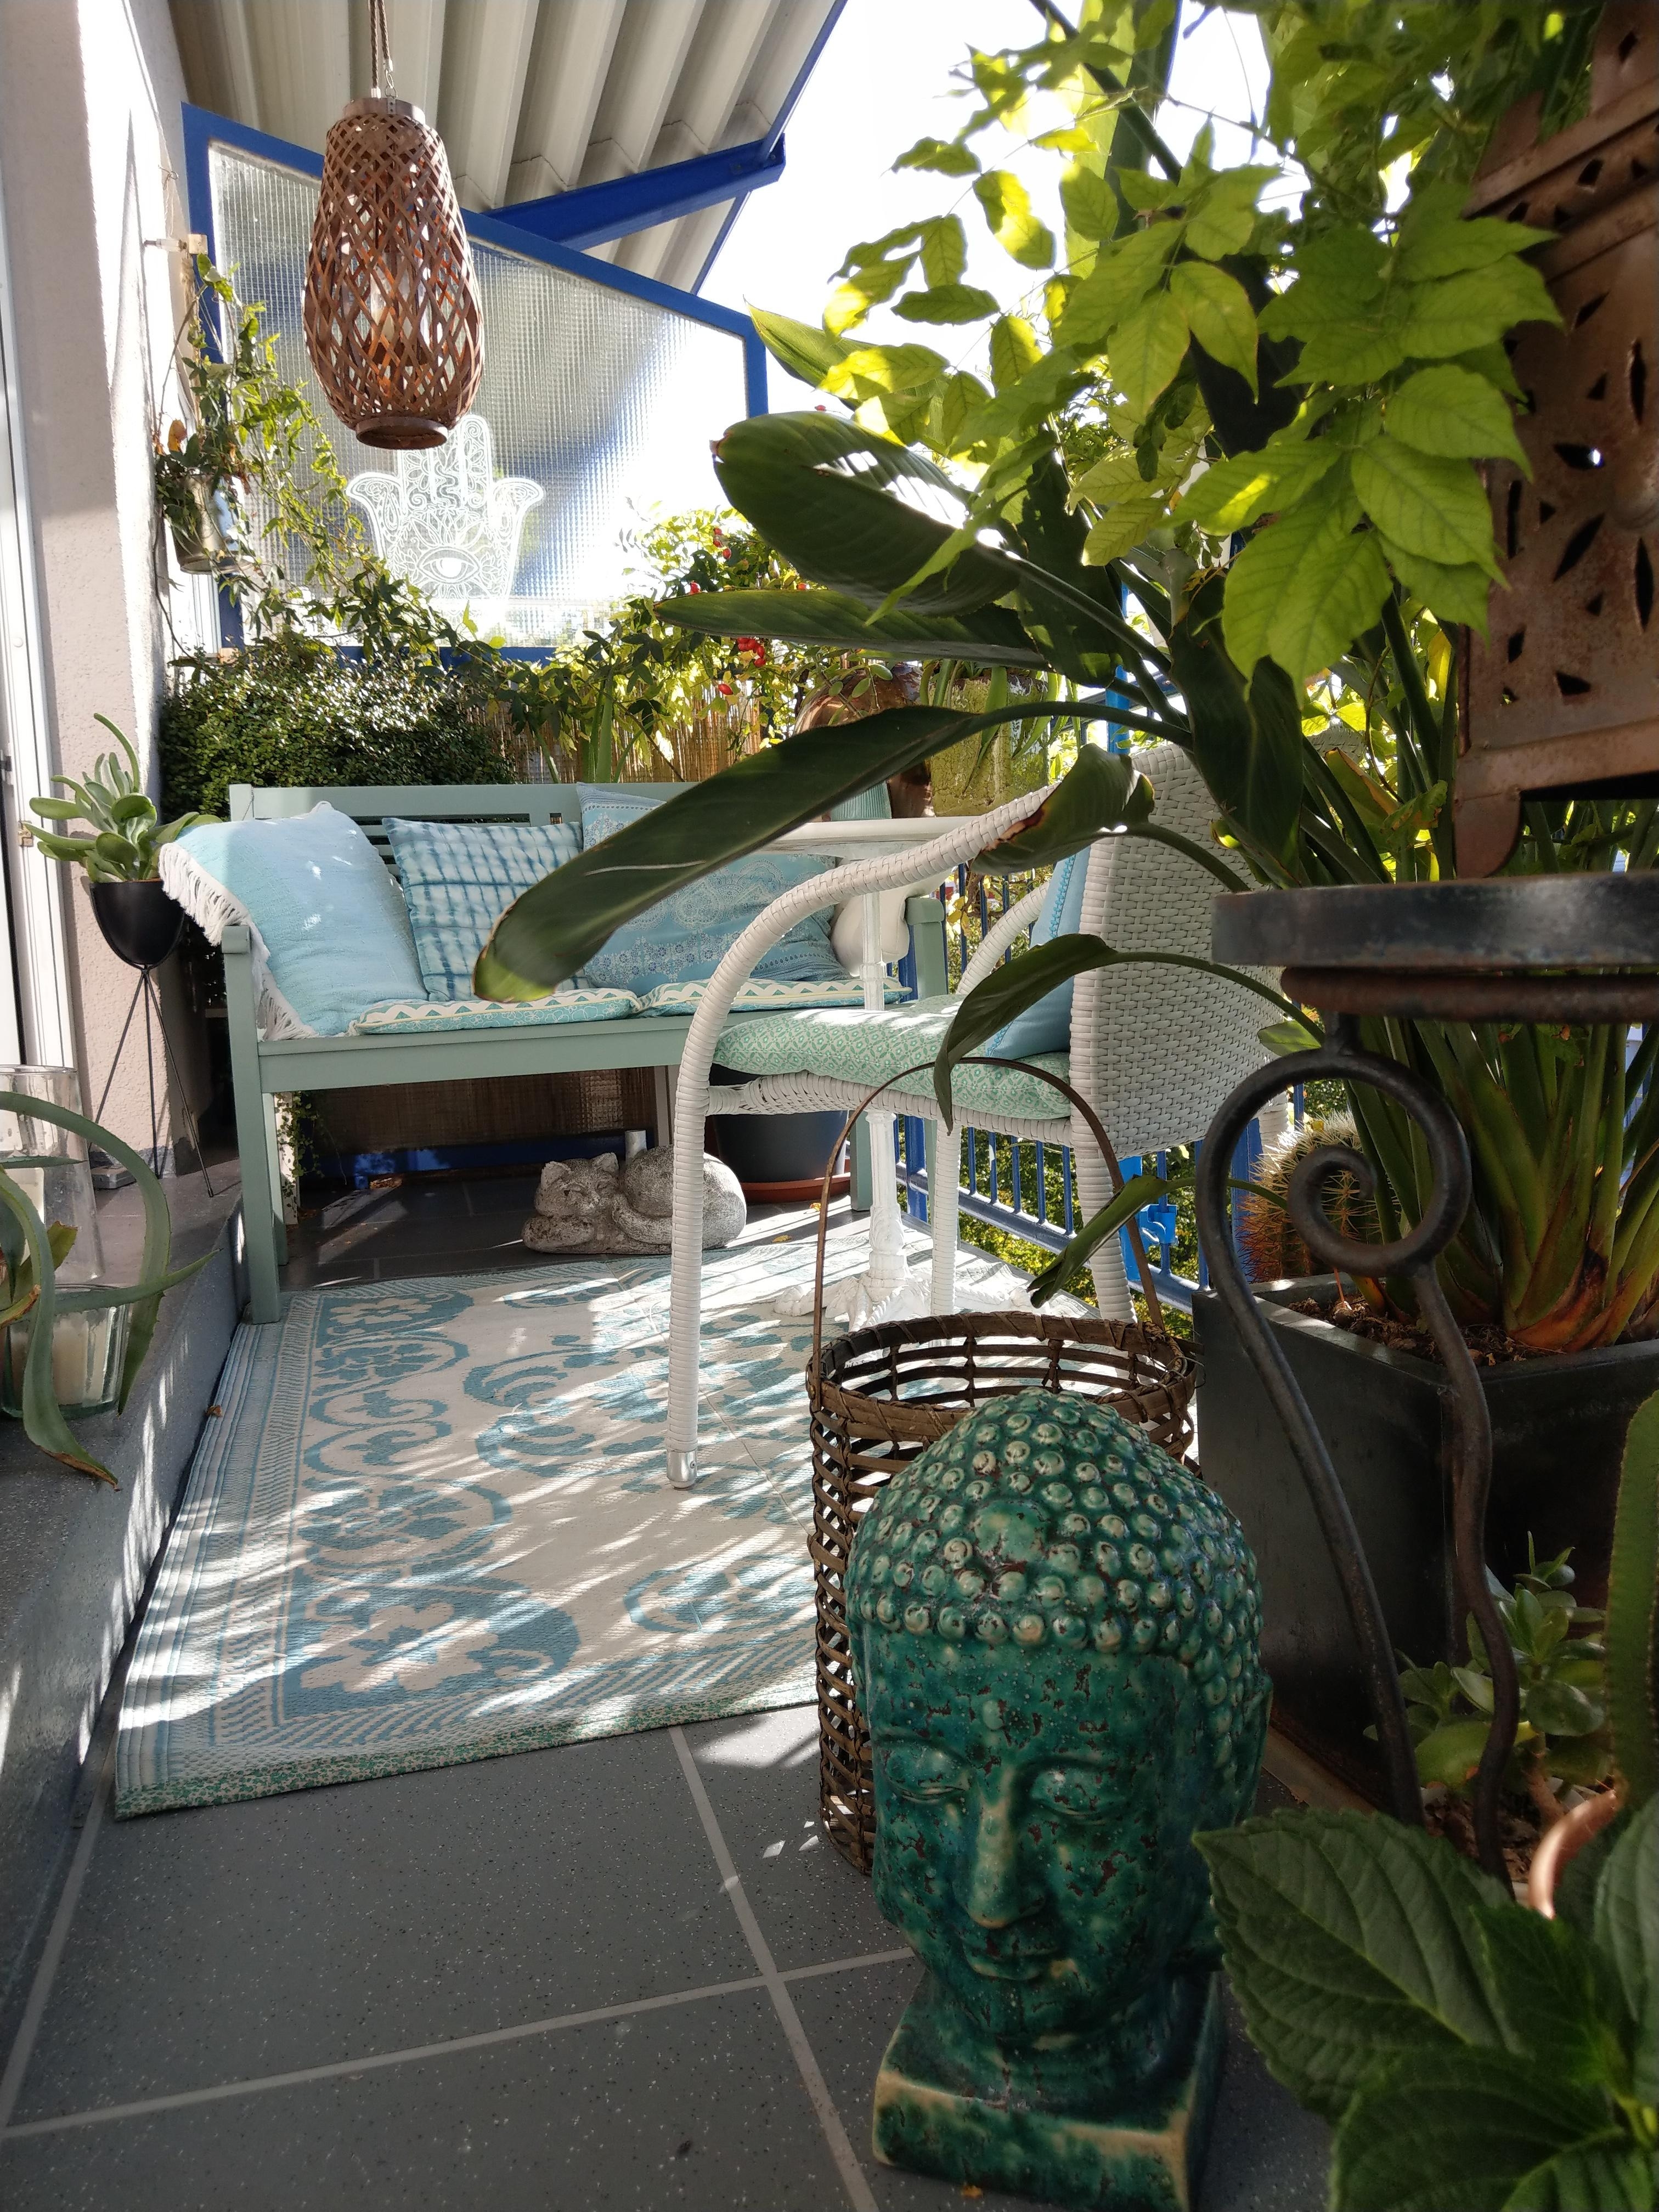 Lieblingsort Balkon 

#terrace #türkis #blau #sunnyplace #abschalten #balistyle 